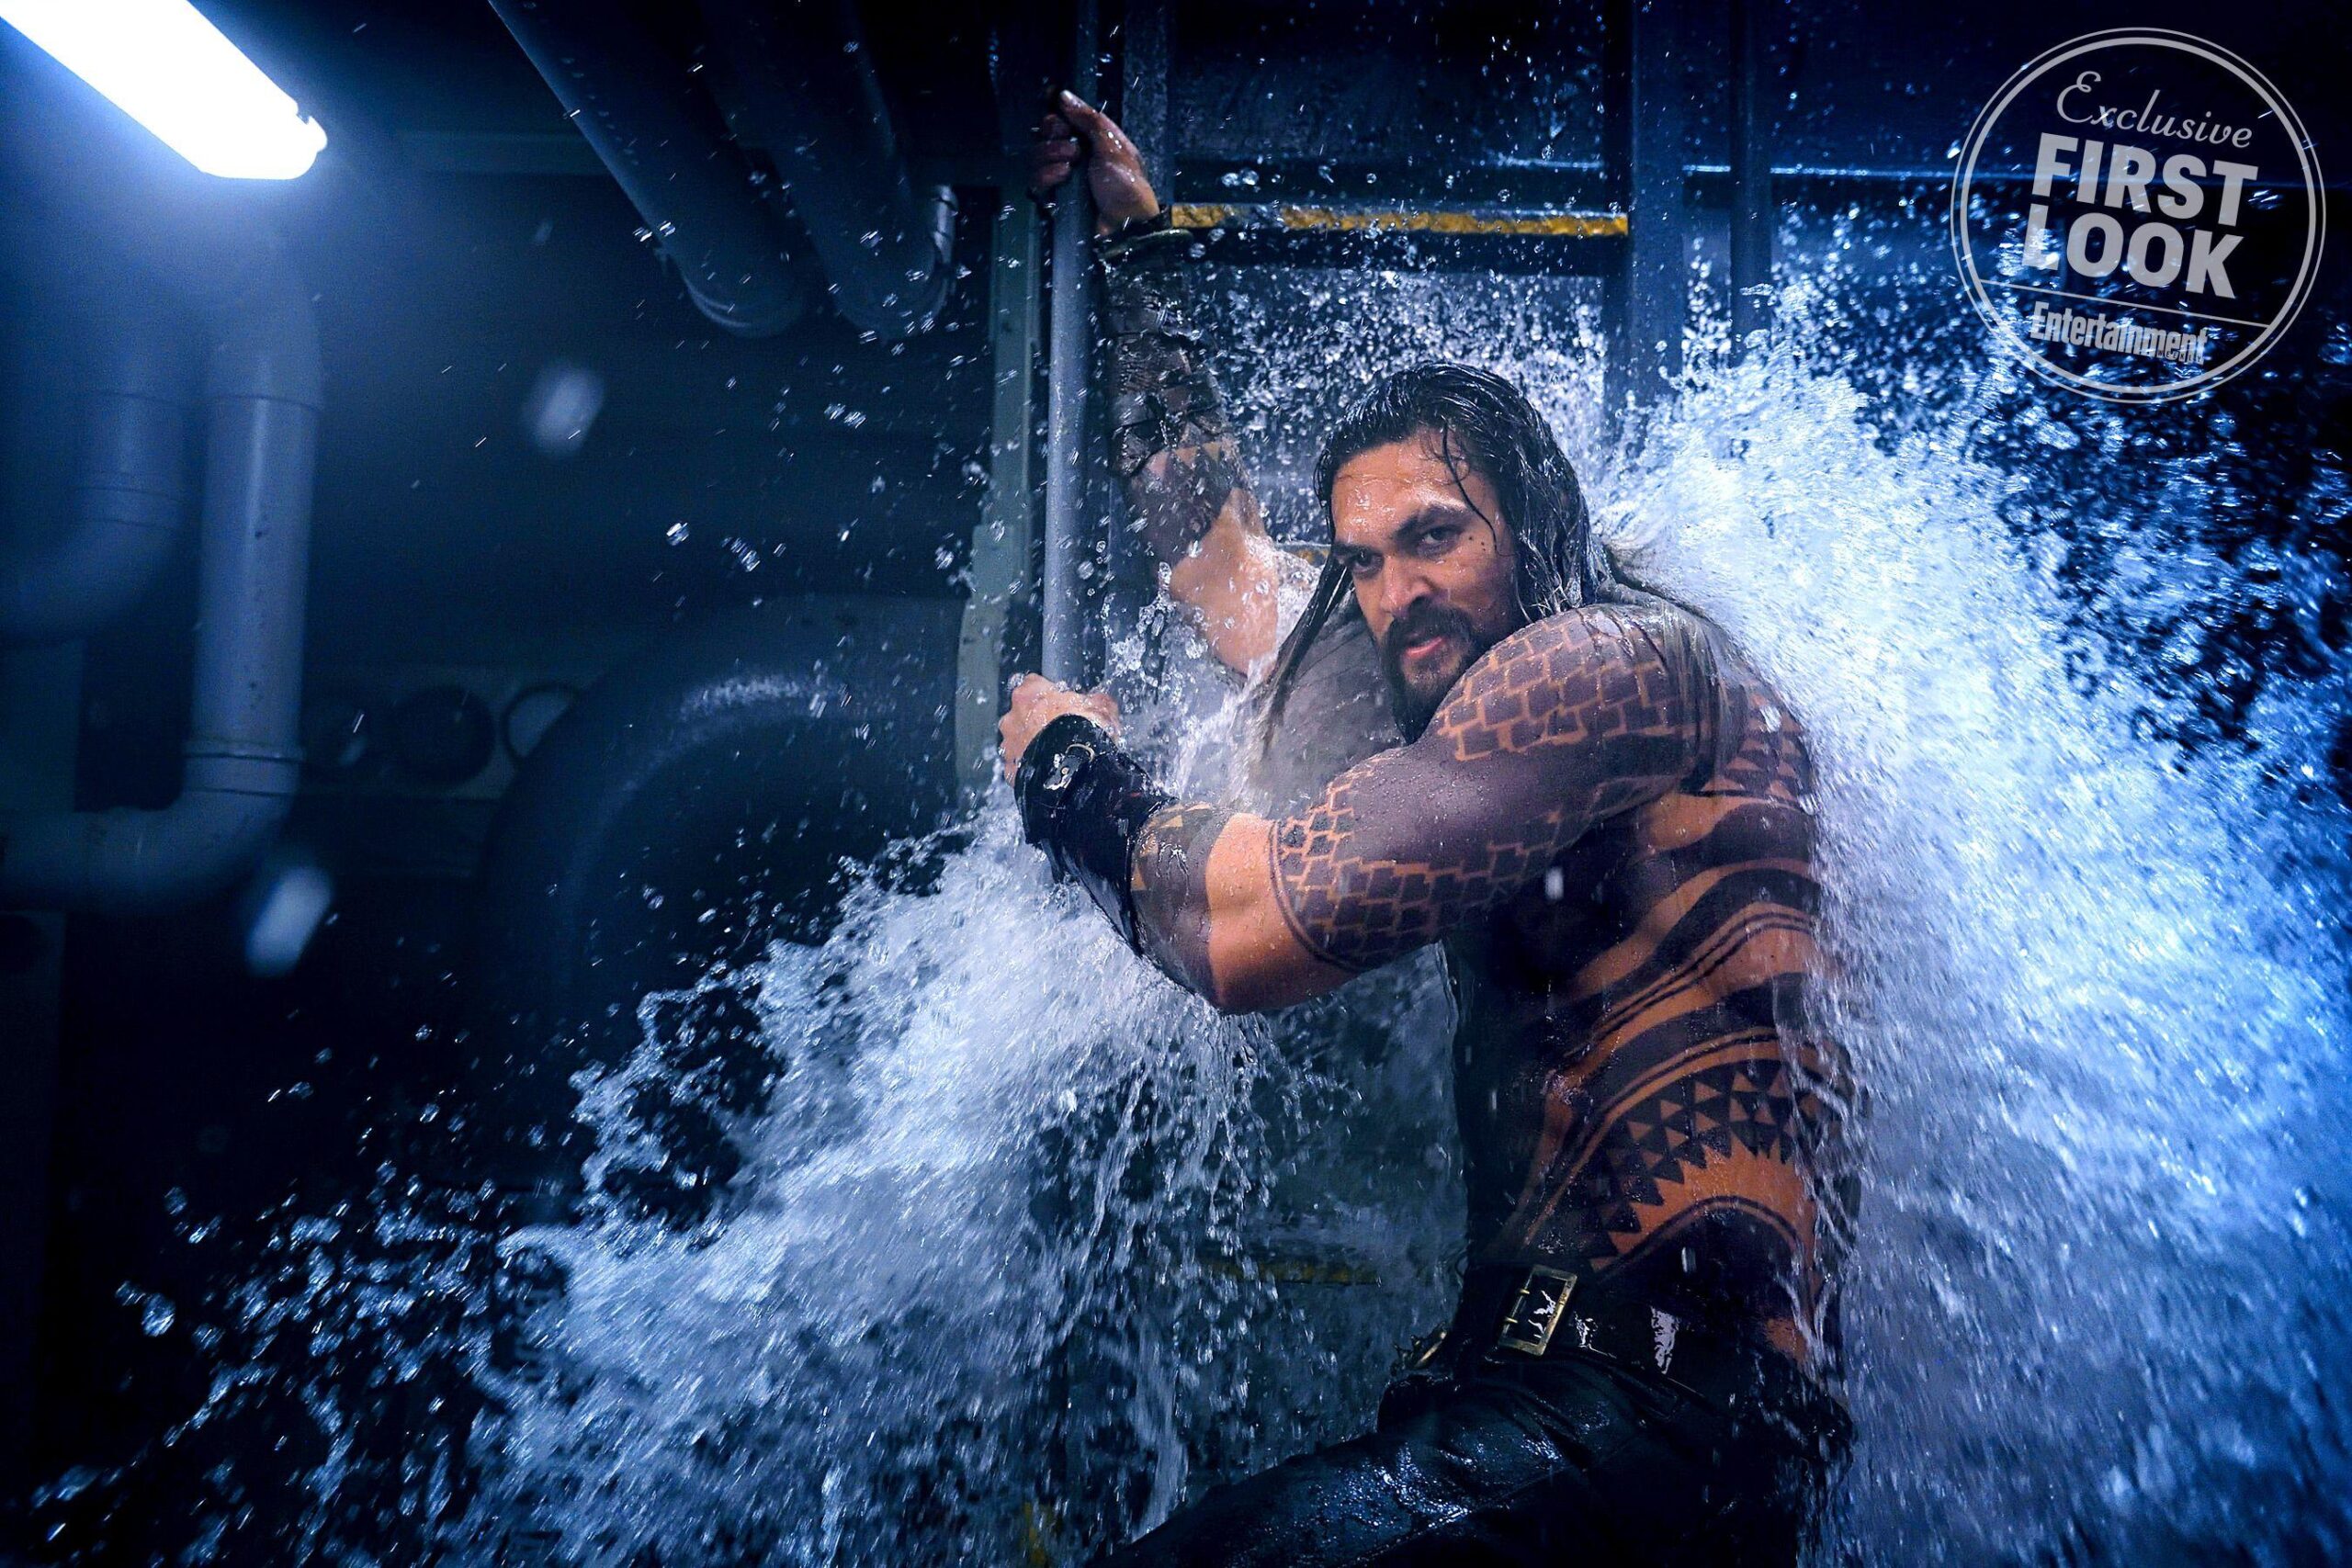 Aquaman Exclusive photos reveal King Orm, Vulko, Mera, and more